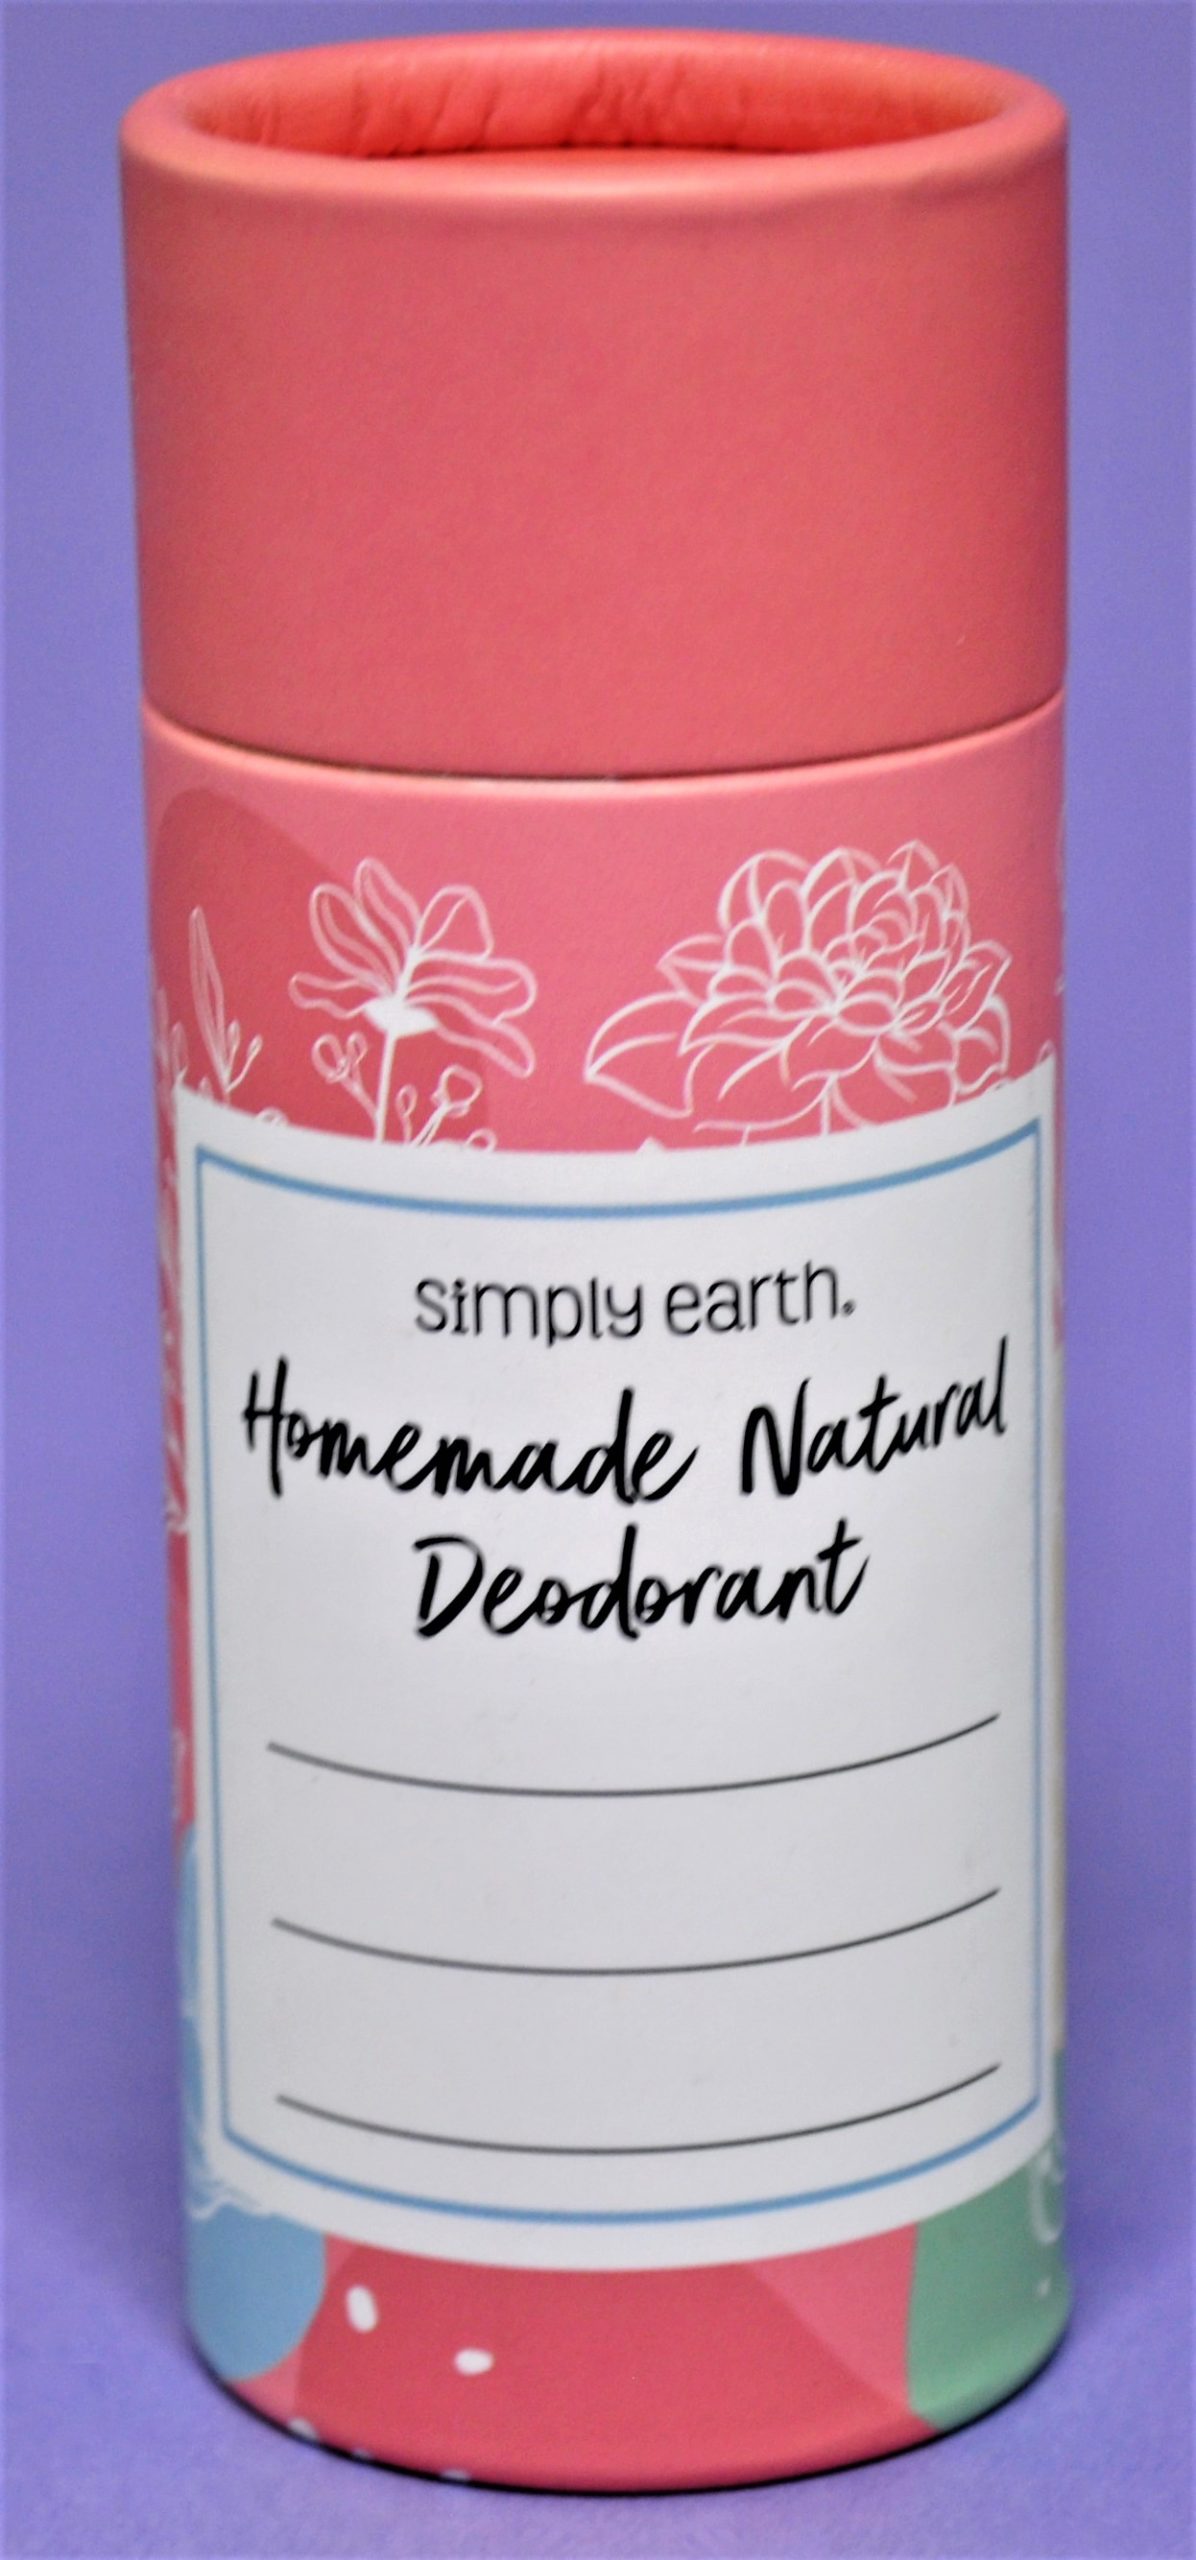 Simply Earth Natural Deodorant Tube